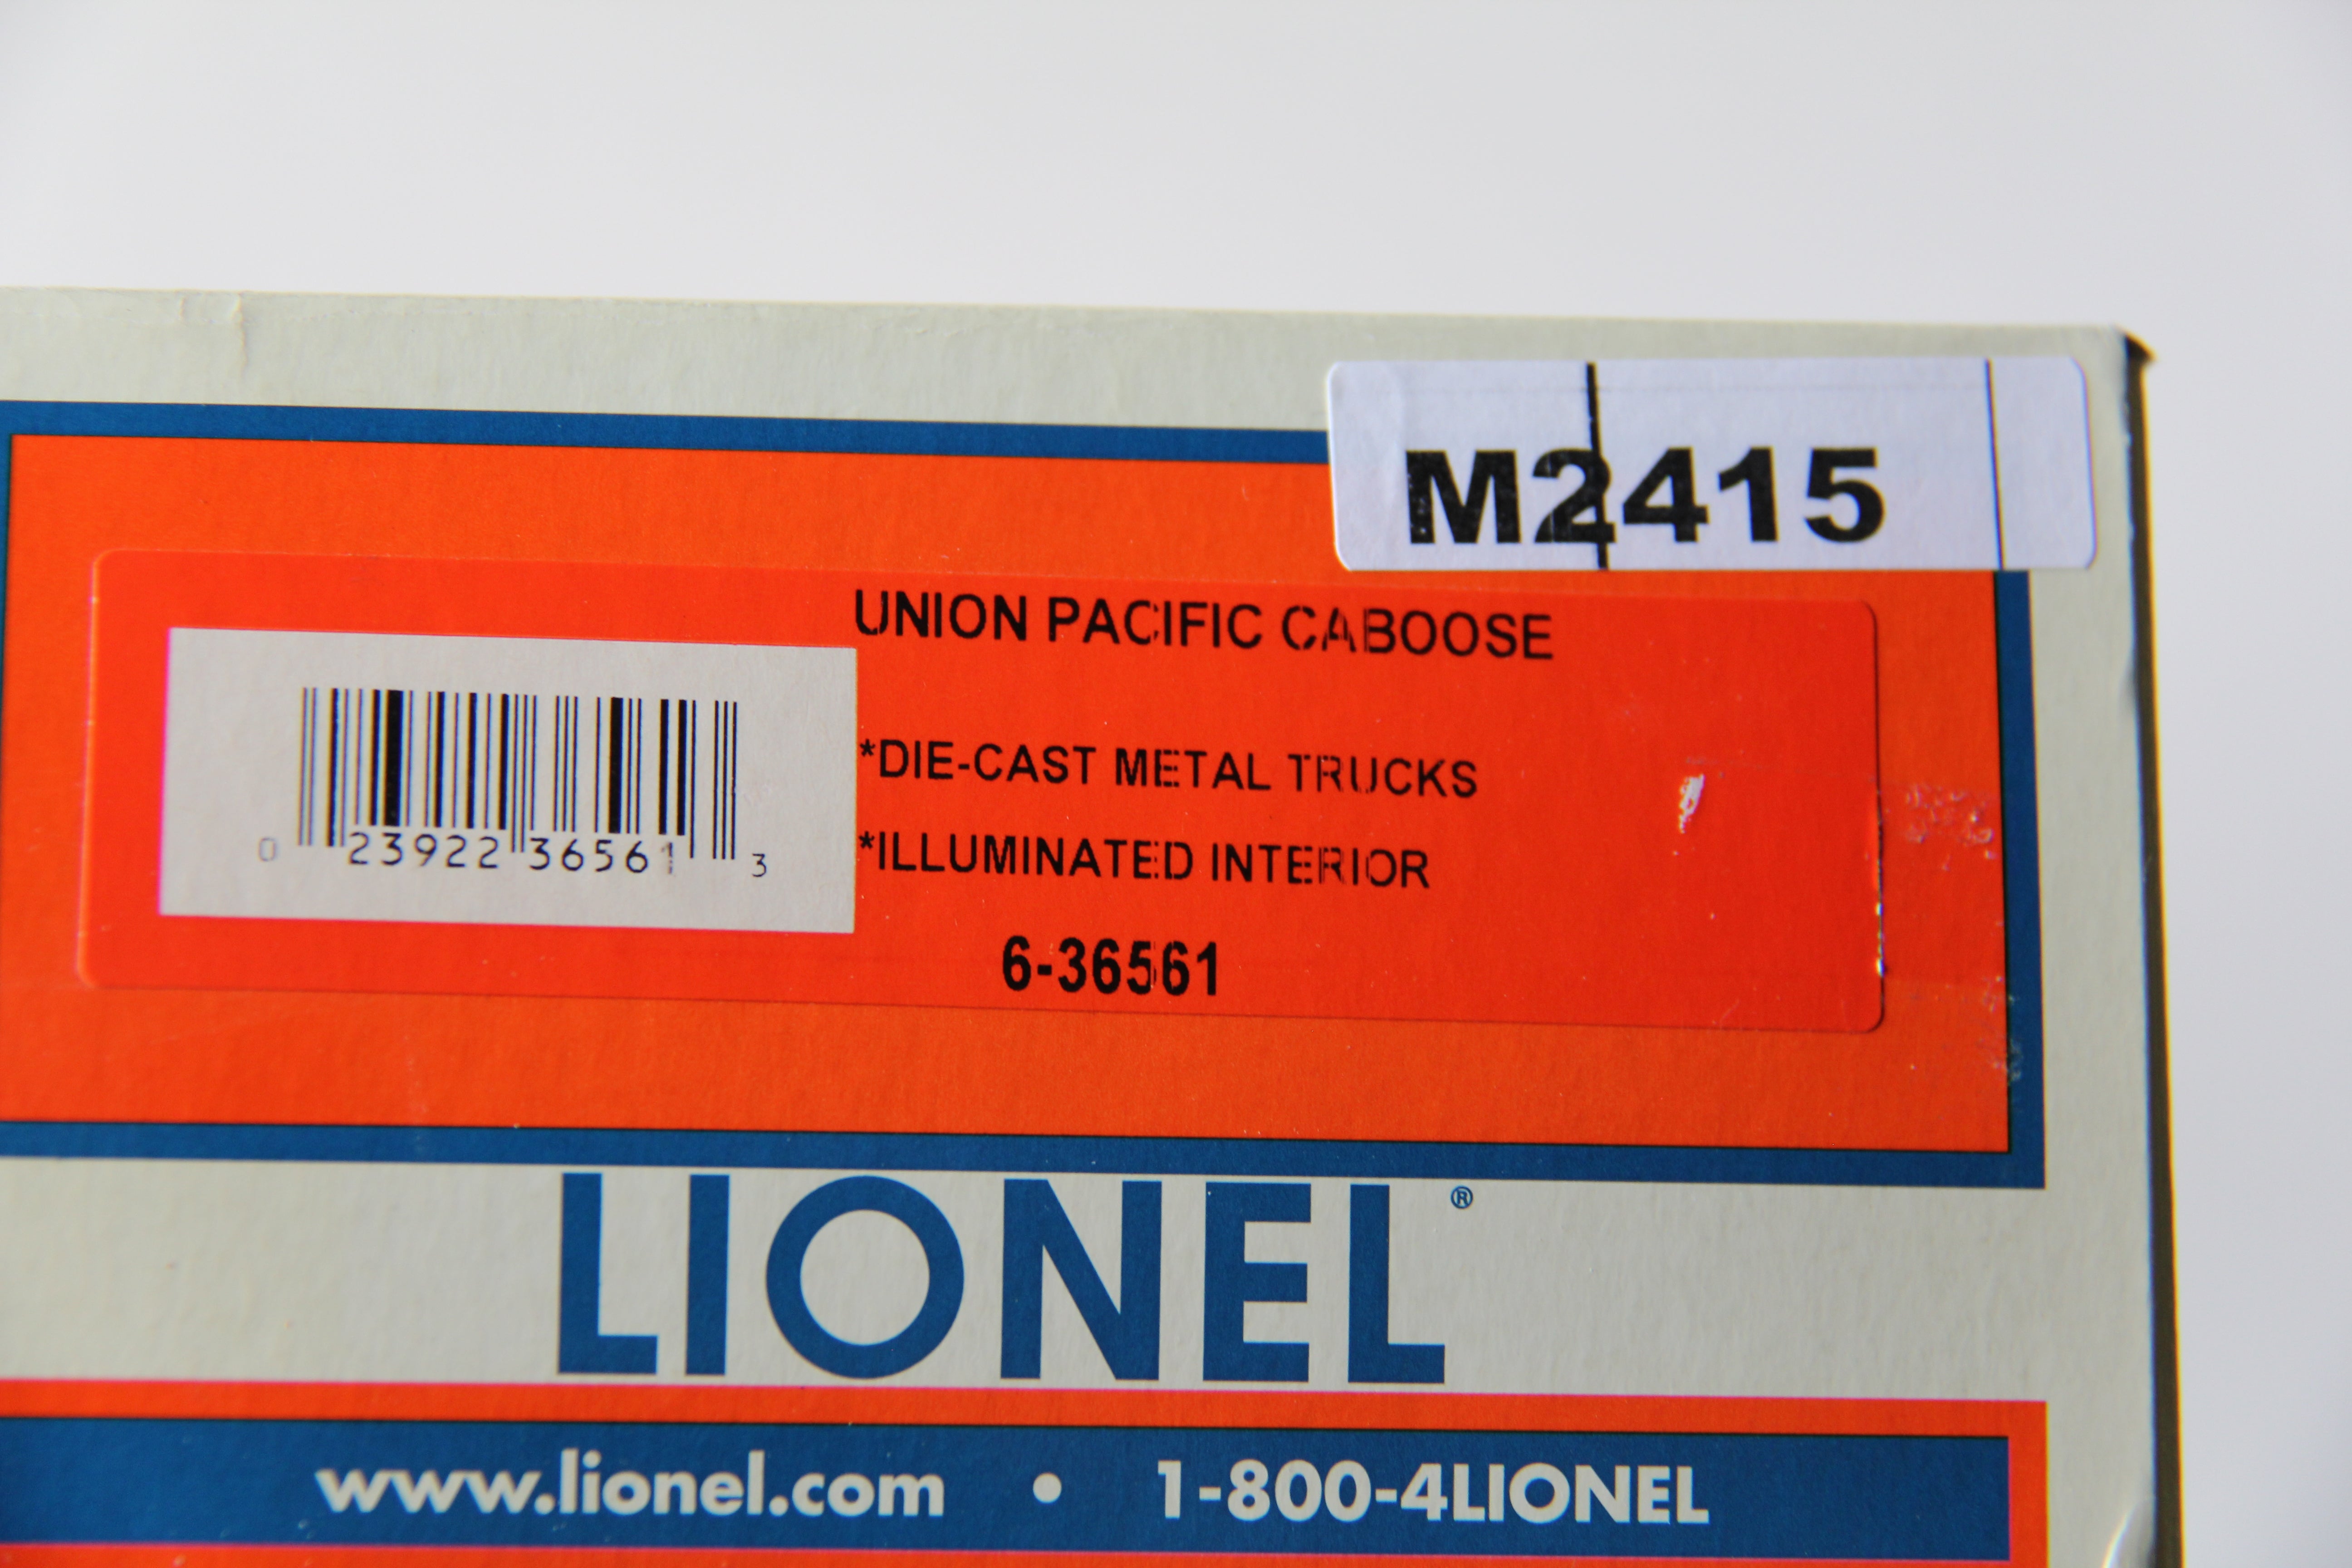 Lionel 6-36561 Union Pacific Caboose Diecast-Second hand-M2415